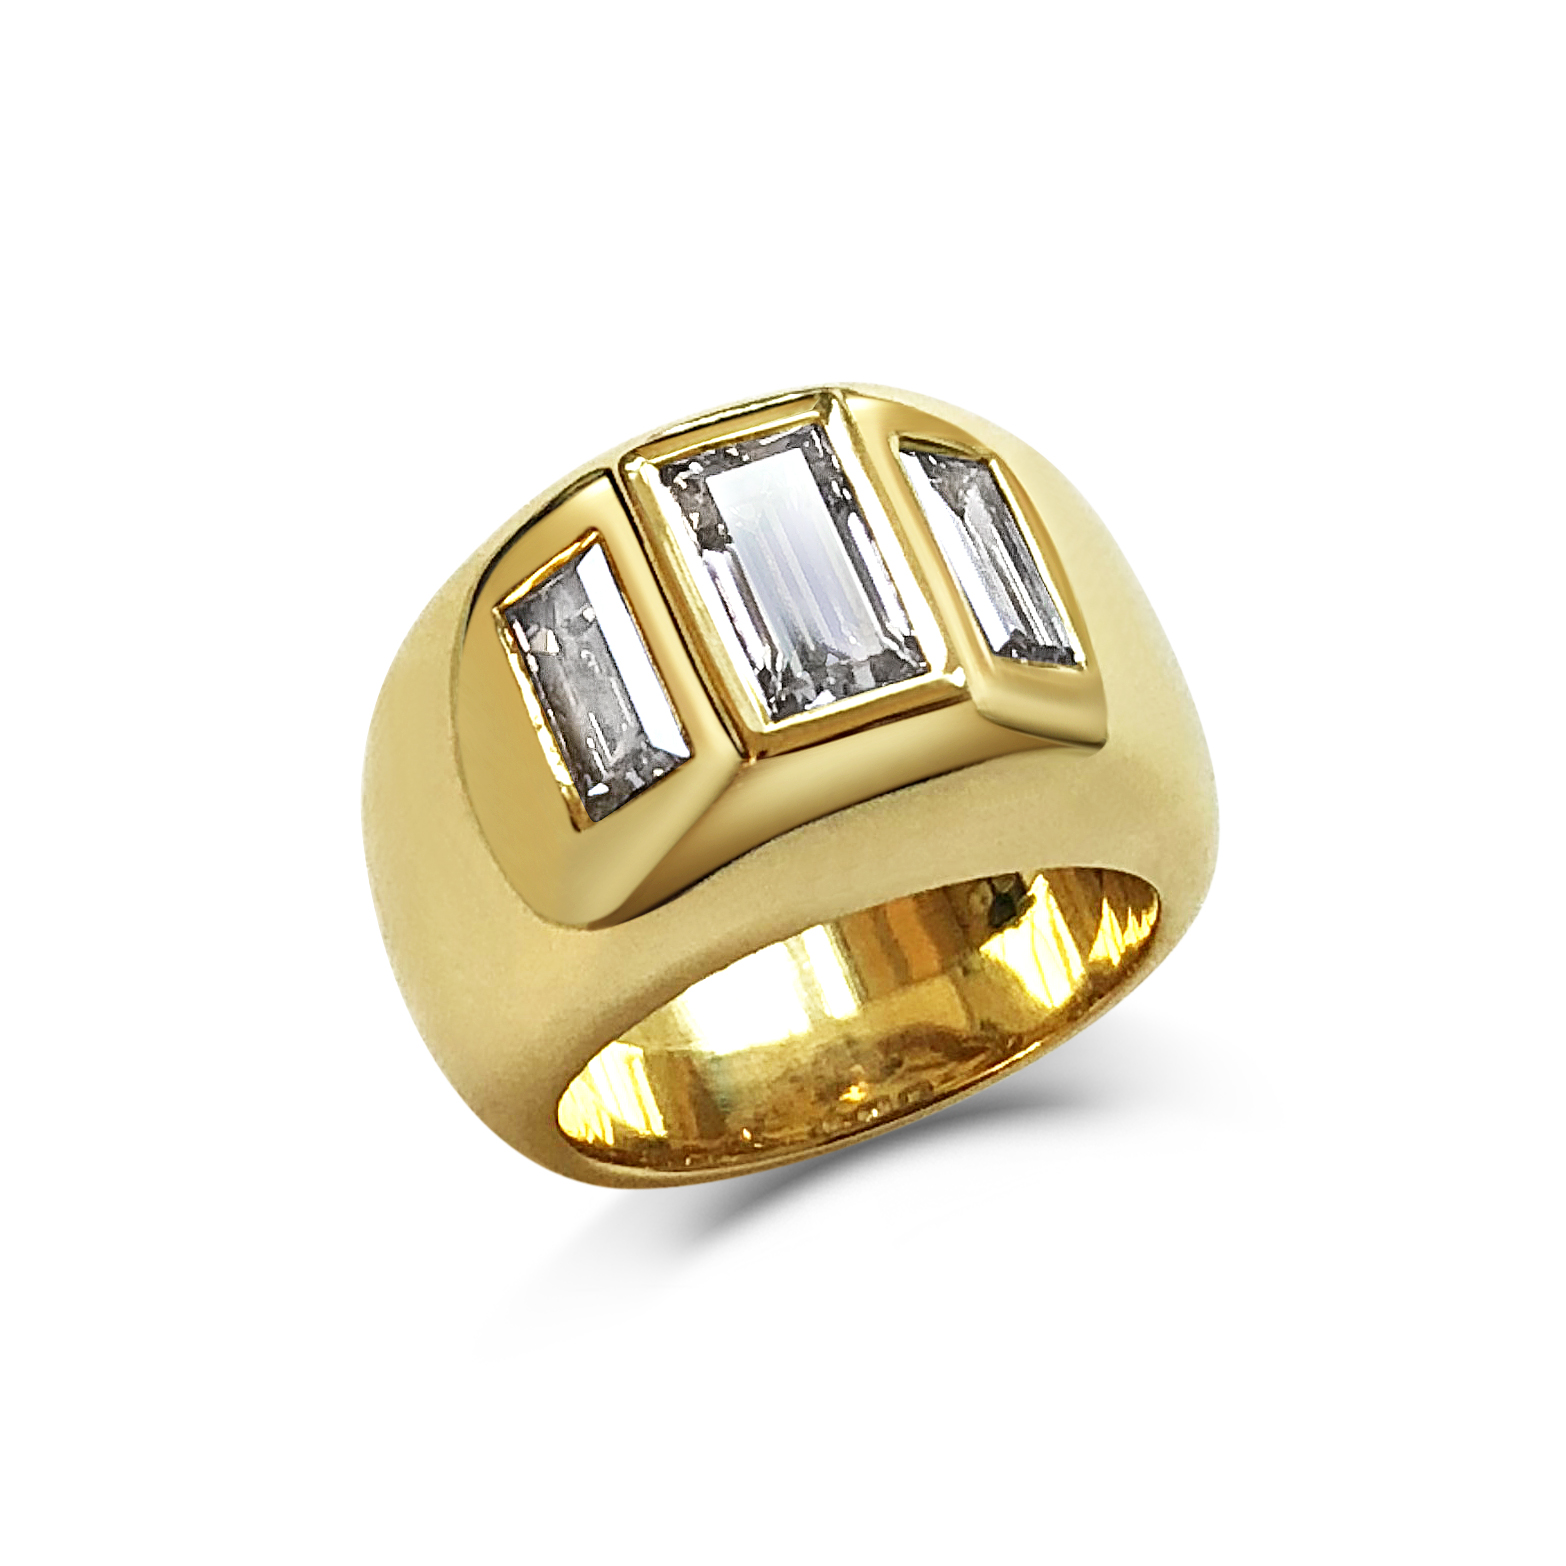 Baguette-cut diamond ring